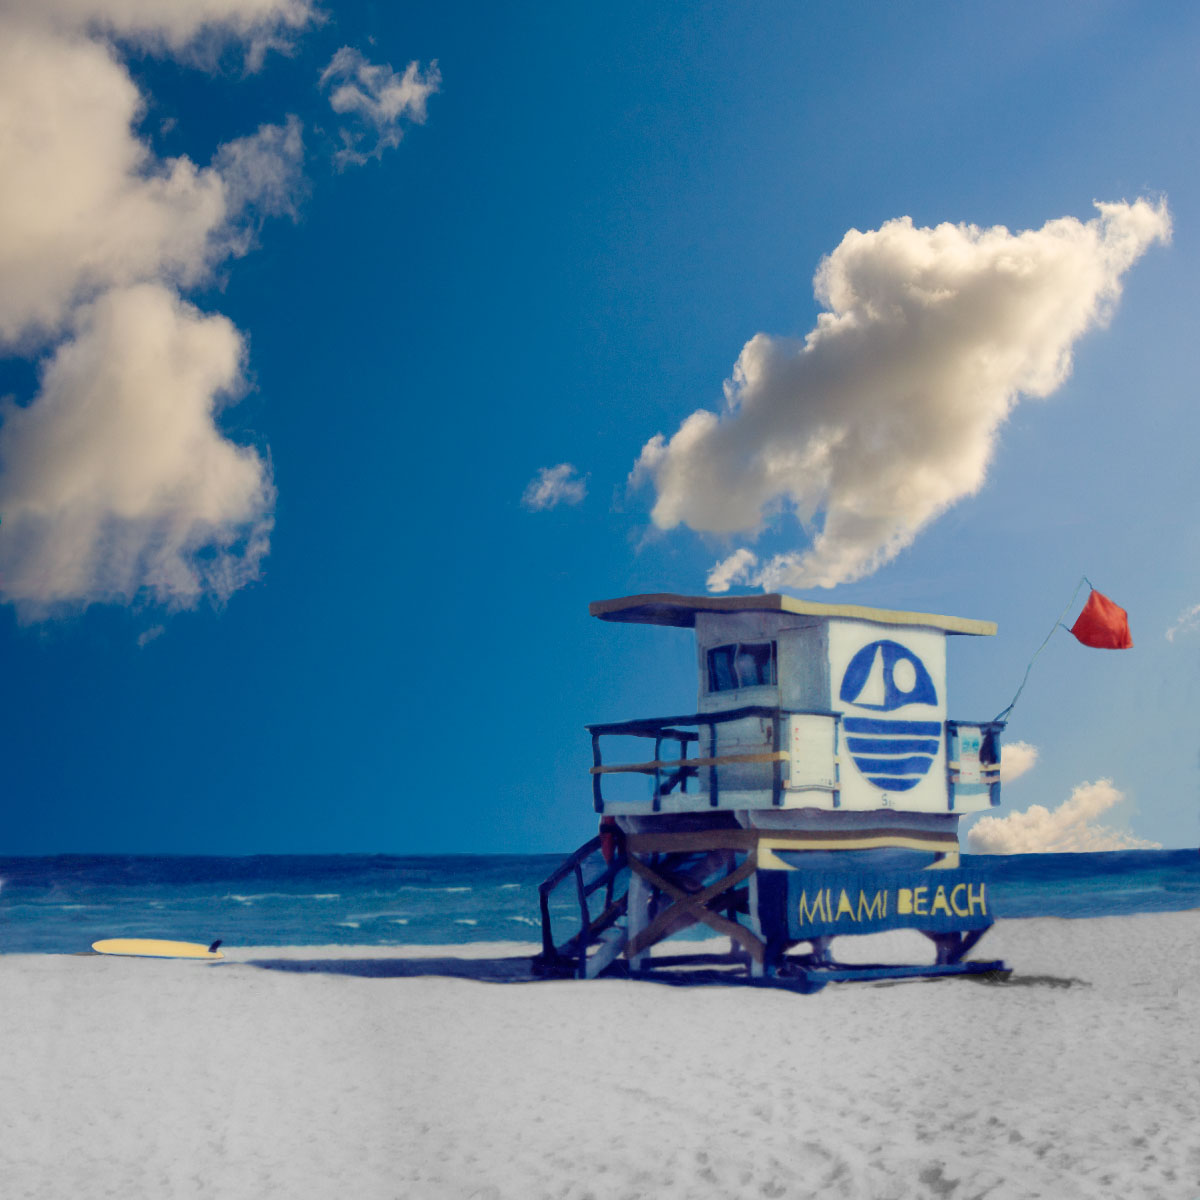 "Miami Beach Lifeguard Stand #19"